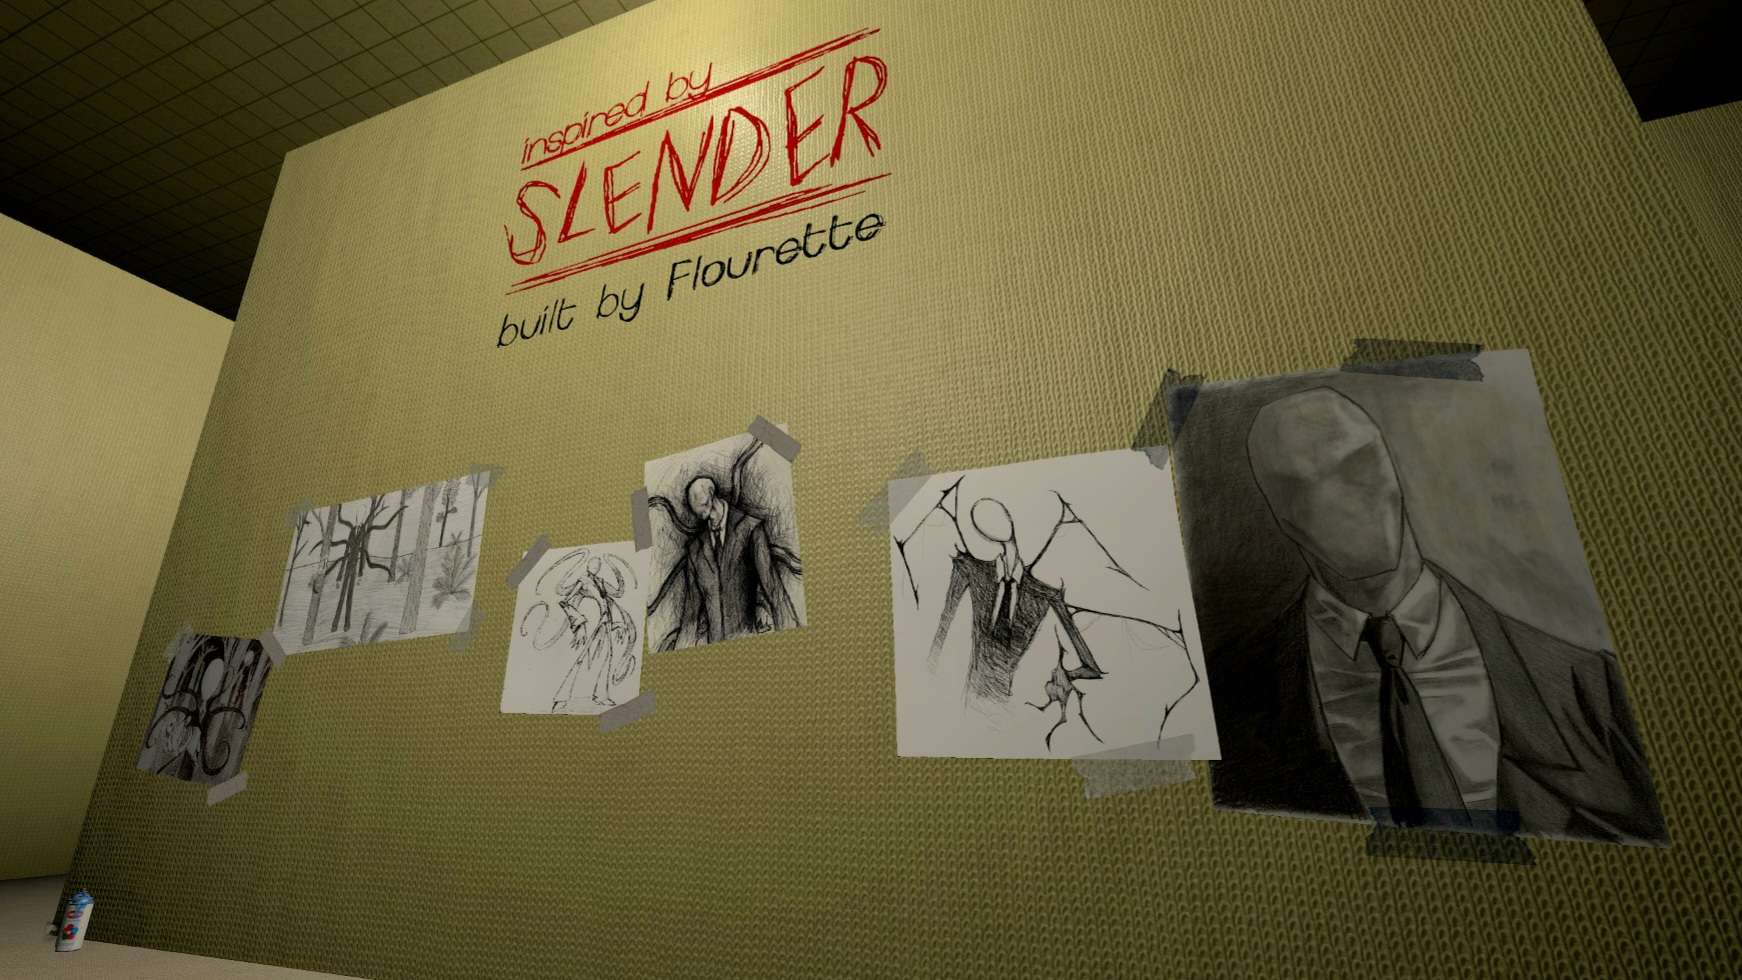 Slender inspired Condo by Flourette - Community Showcase - PixelTail Games  - Creators of Tower Unite!